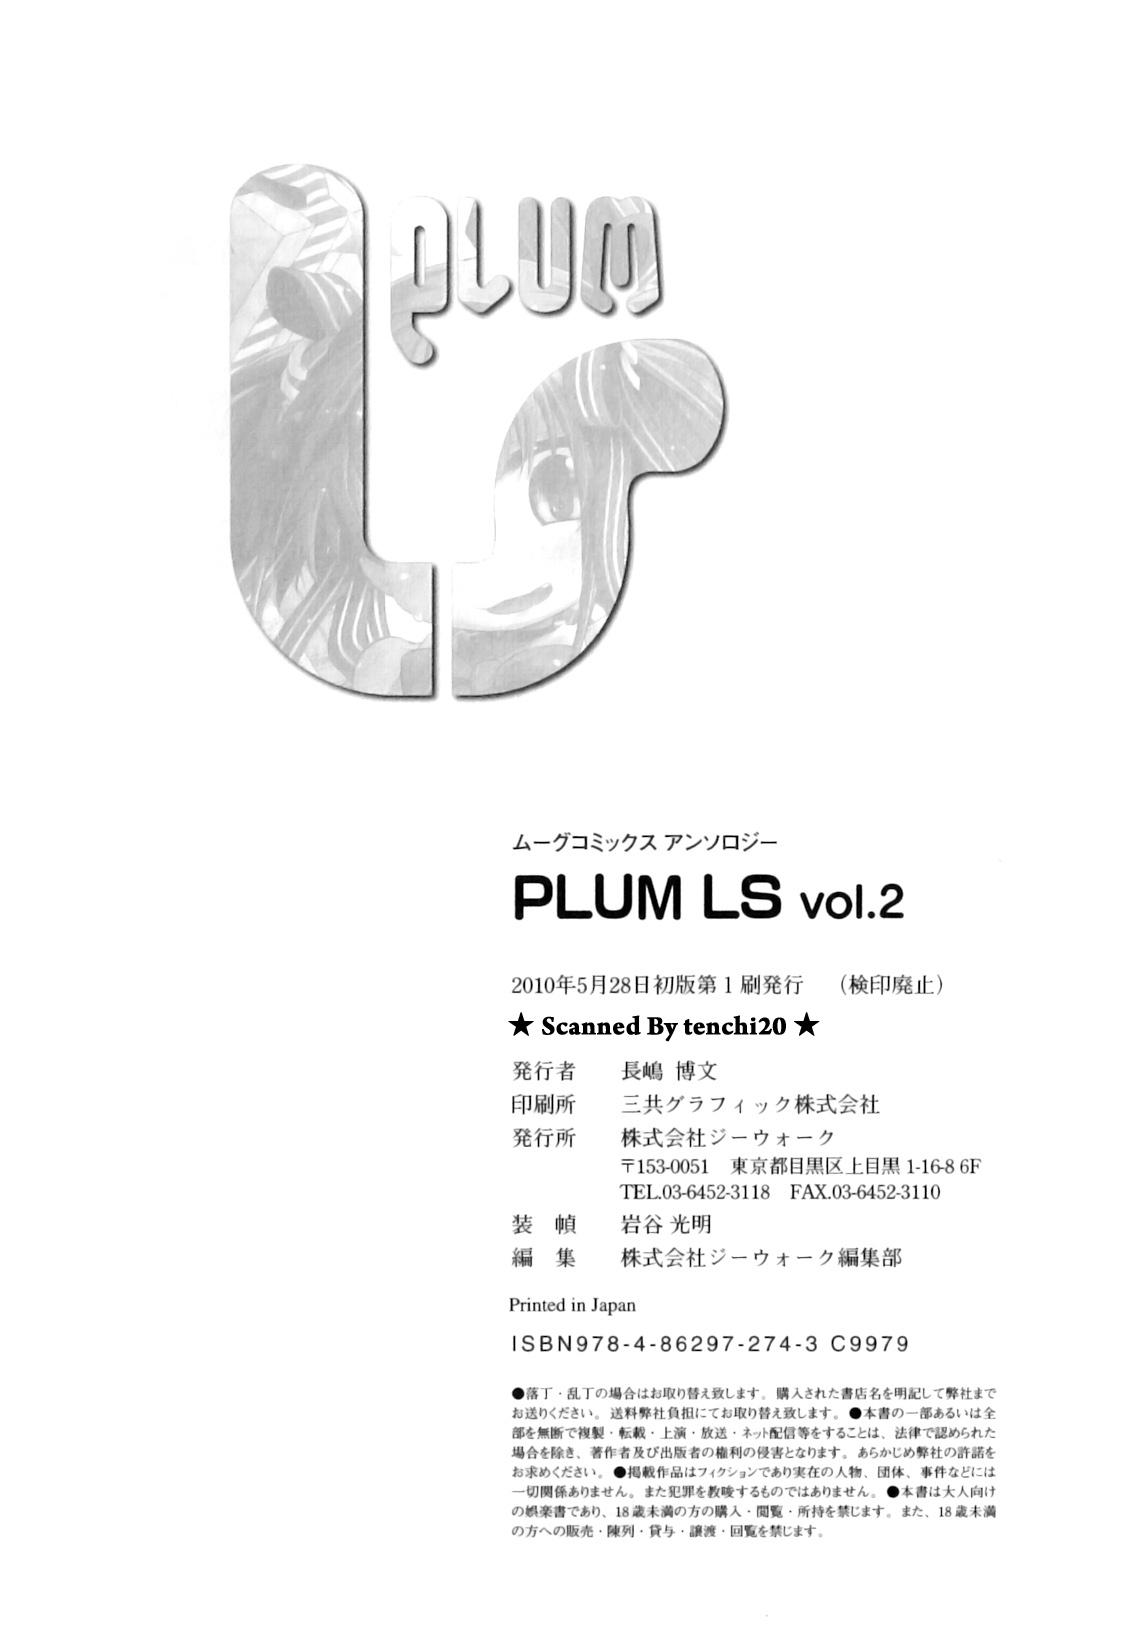 Plum LS Vol. 2 182